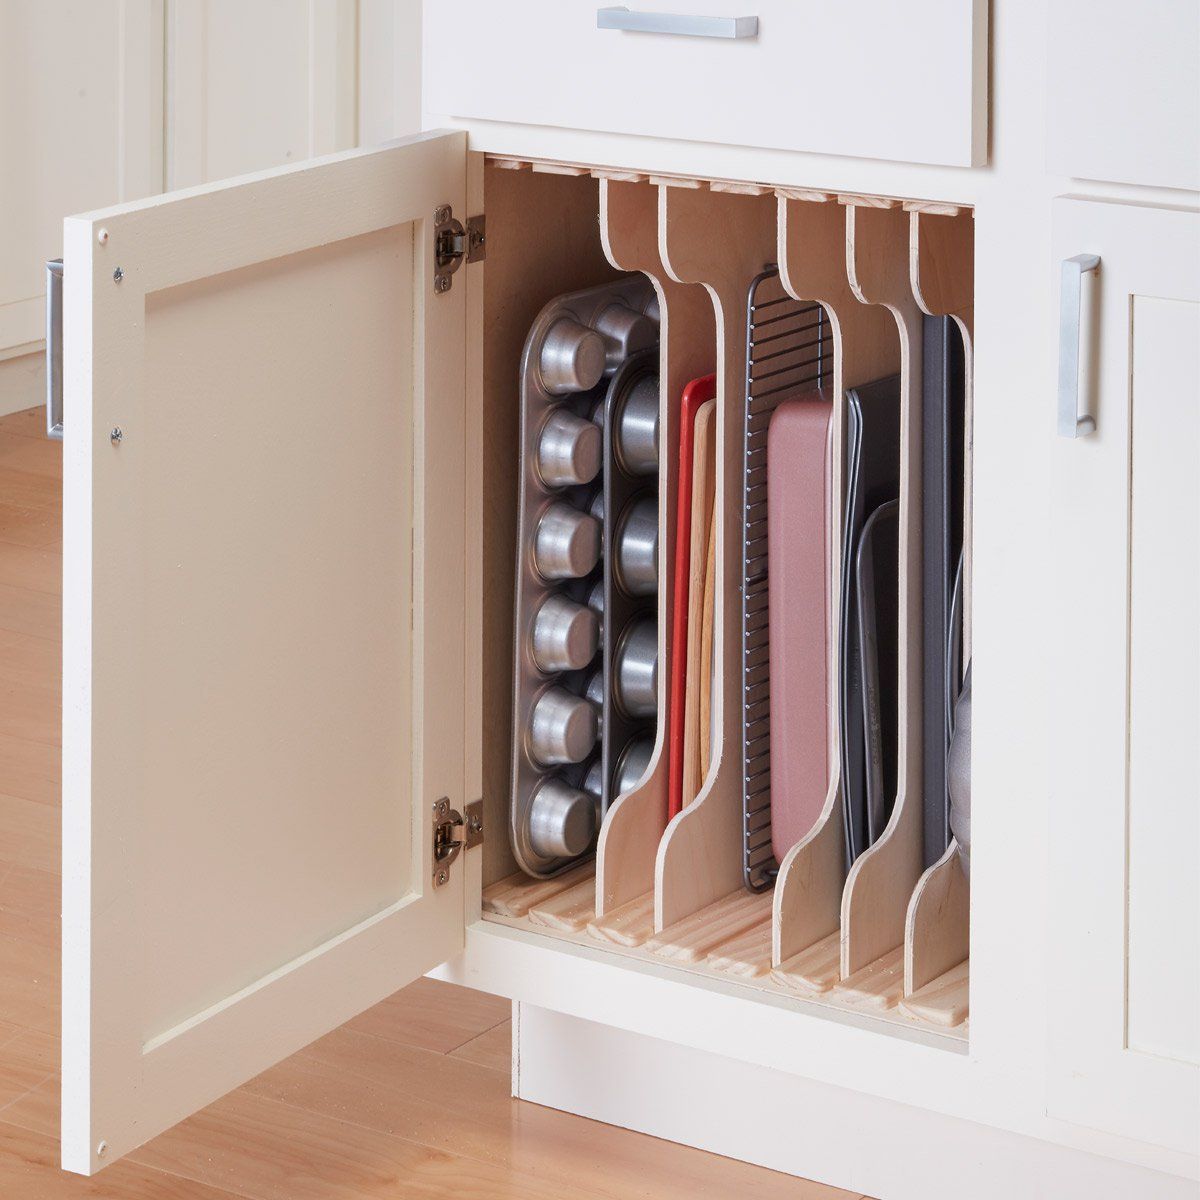 Kitchen Cabinet Organizers: DIY Dividers -   23 diy projects Storage kitchen cabinets ideas